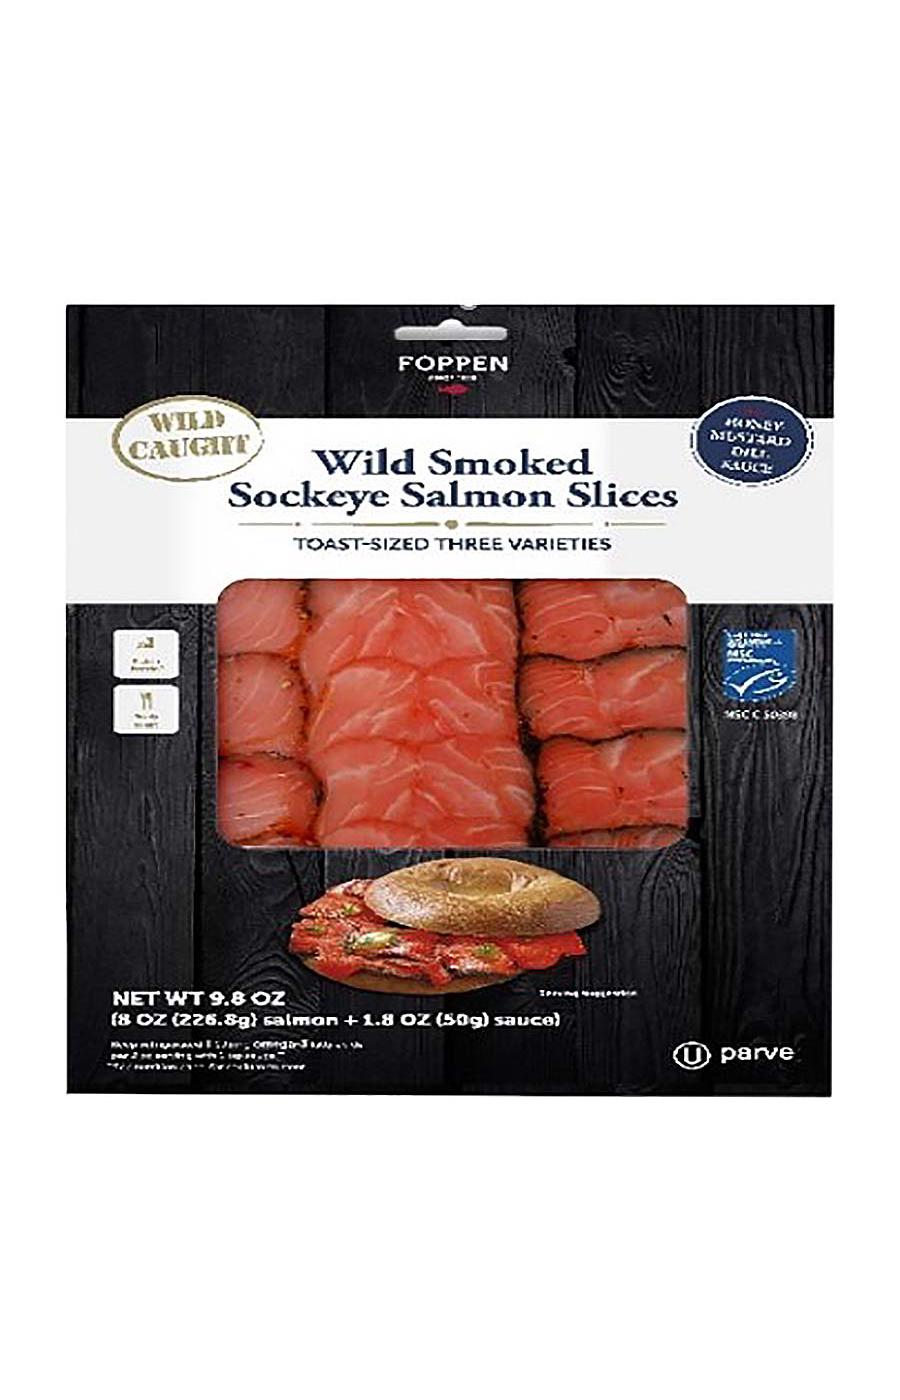 Foppen Cold Smoked Alaskan Sockeye Salmon Slices; image 1 of 2